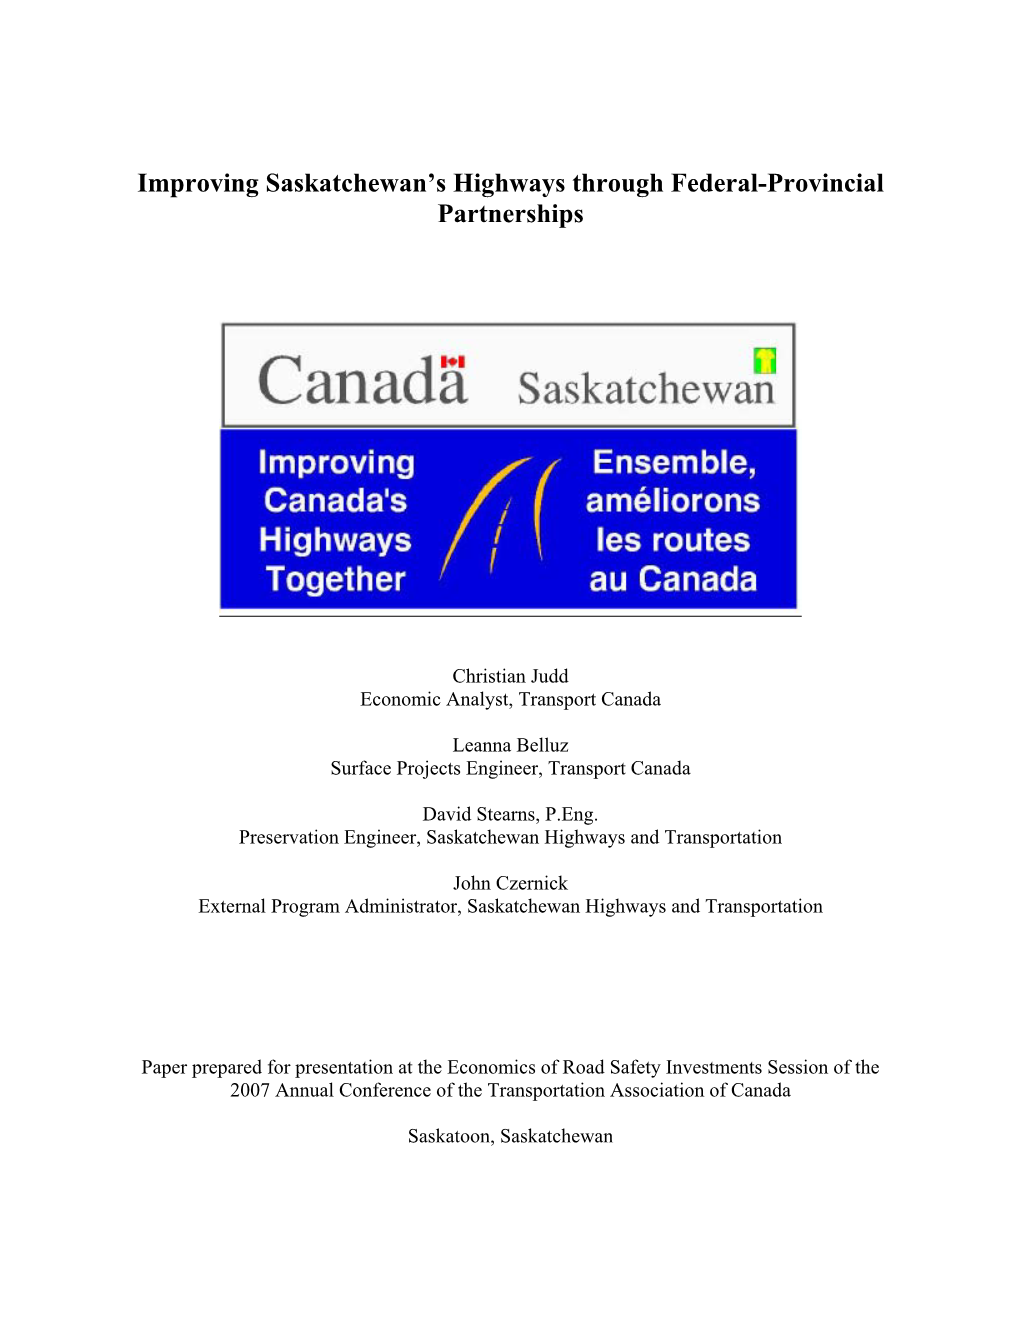 Improving Saskatchewan's Highways Through Federal-Provincial